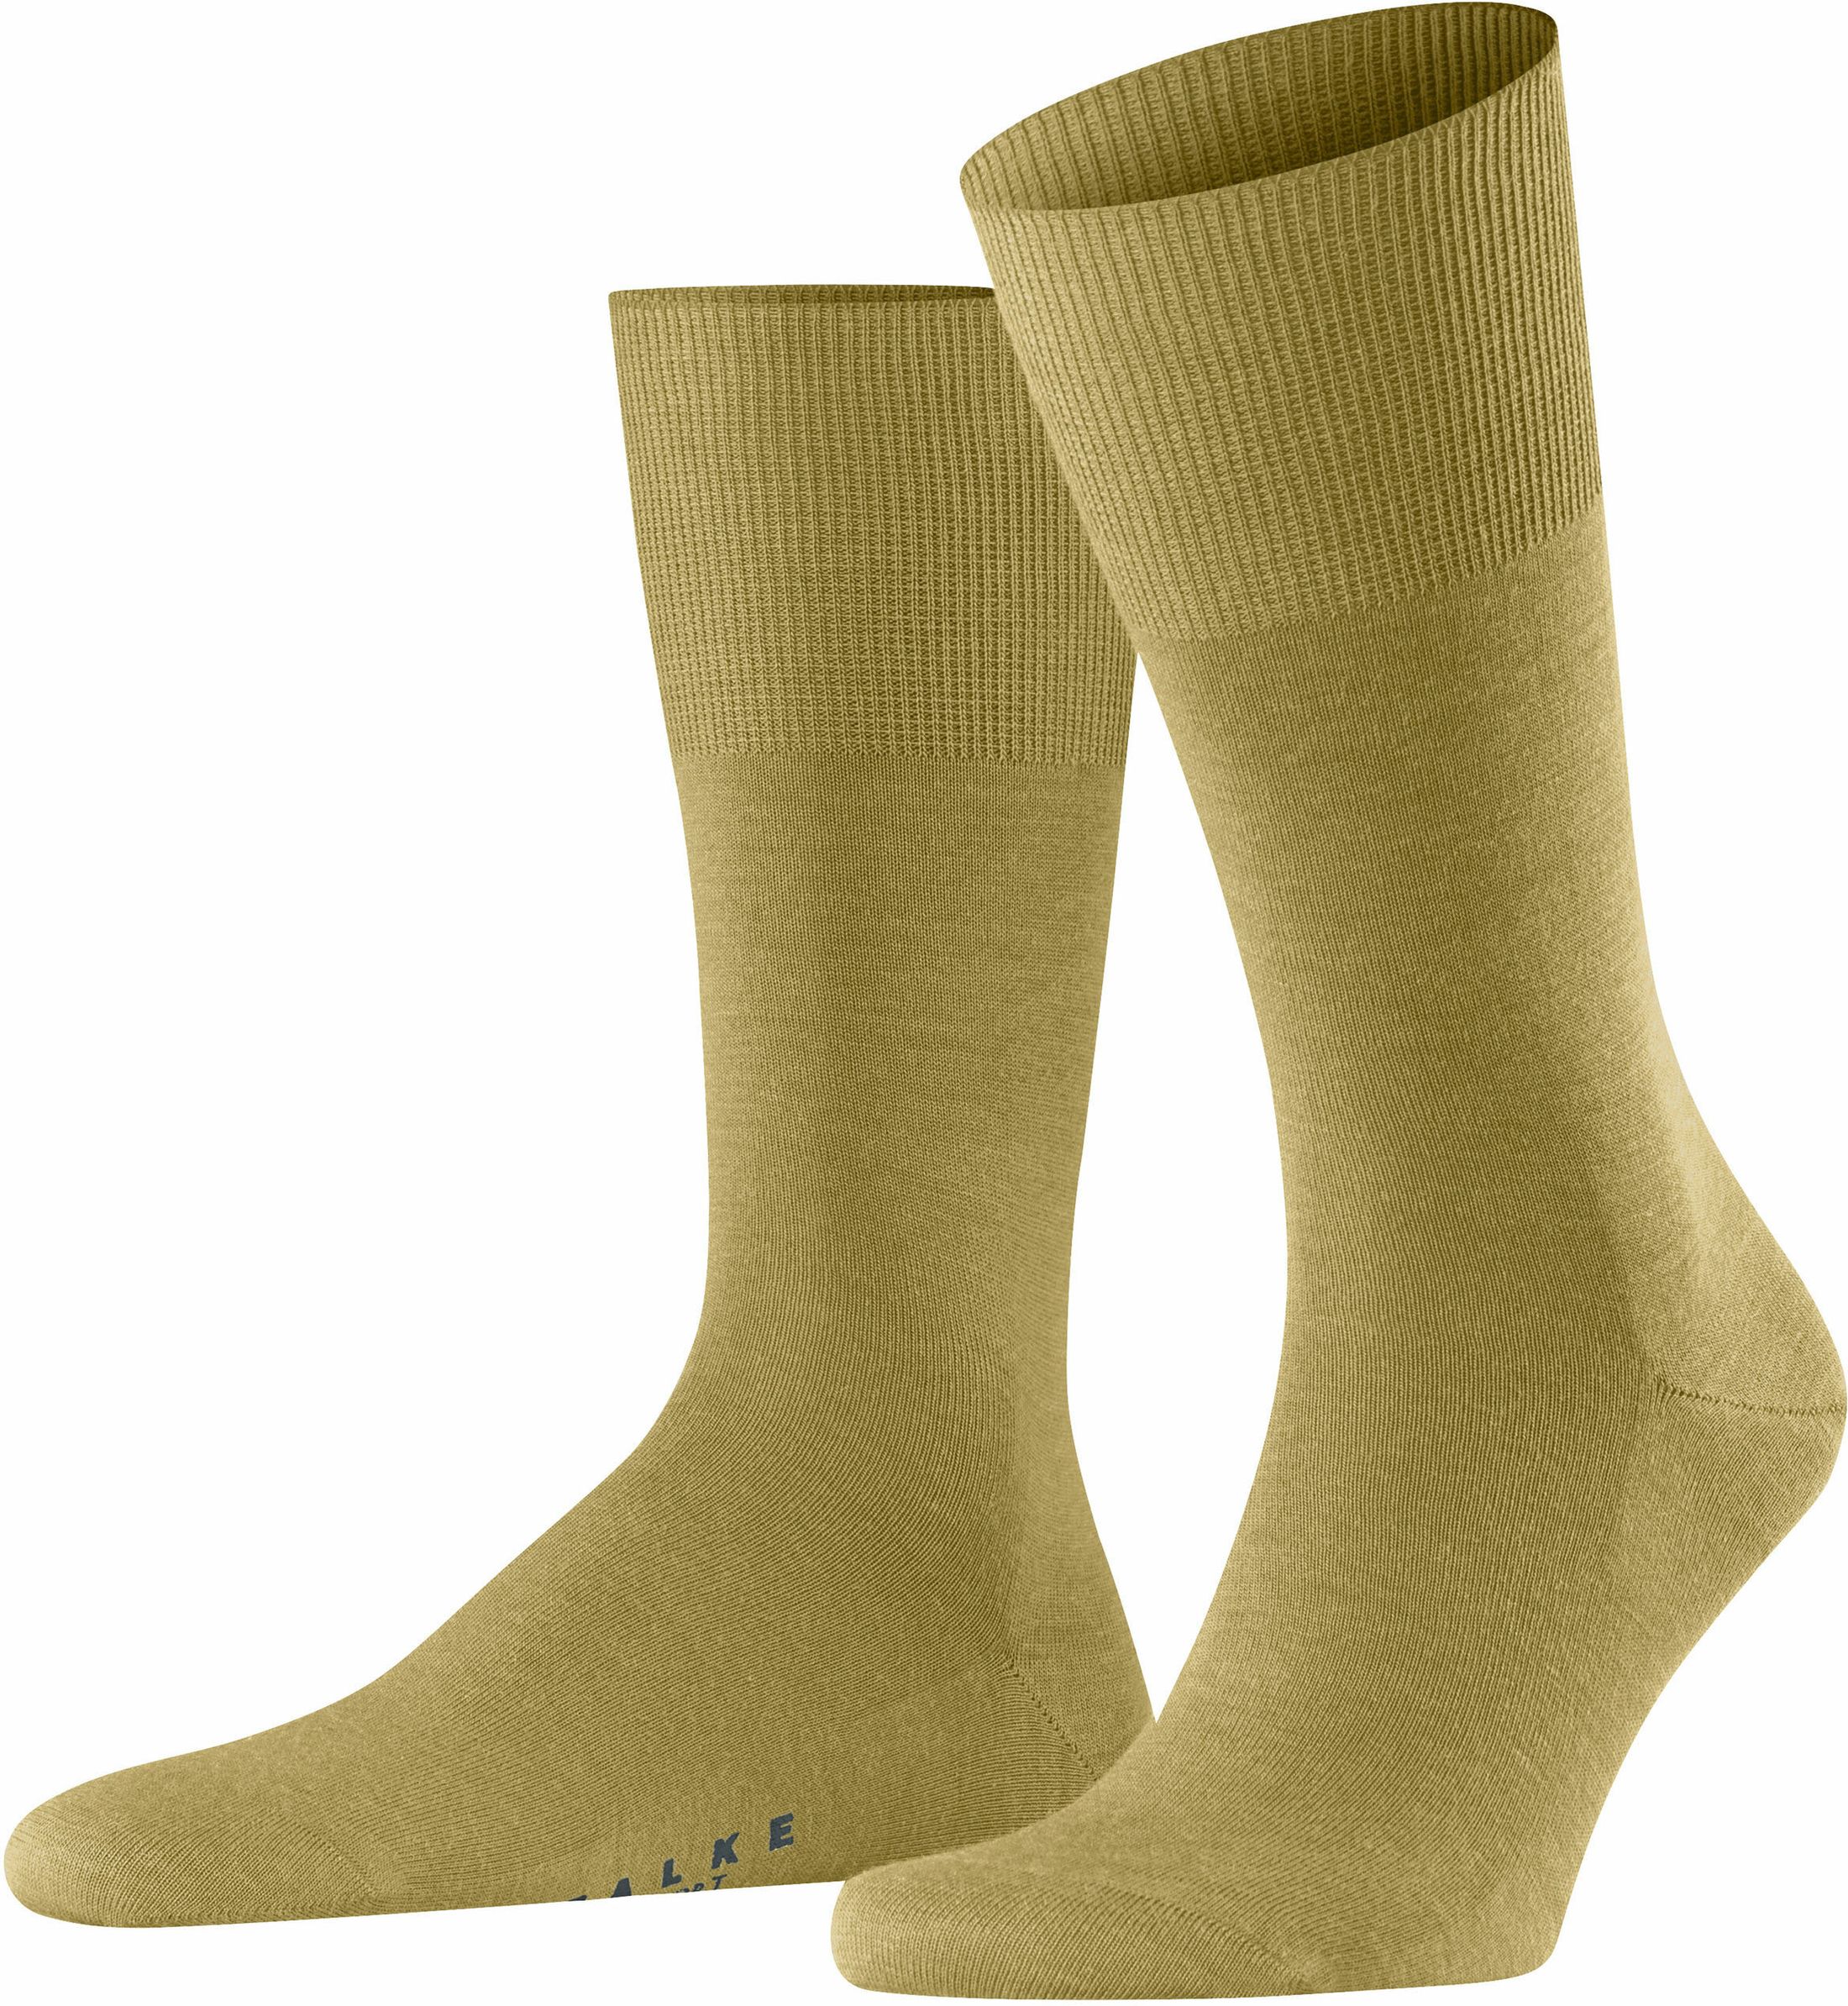 Falke Airport Sock Olive Green size 41-42